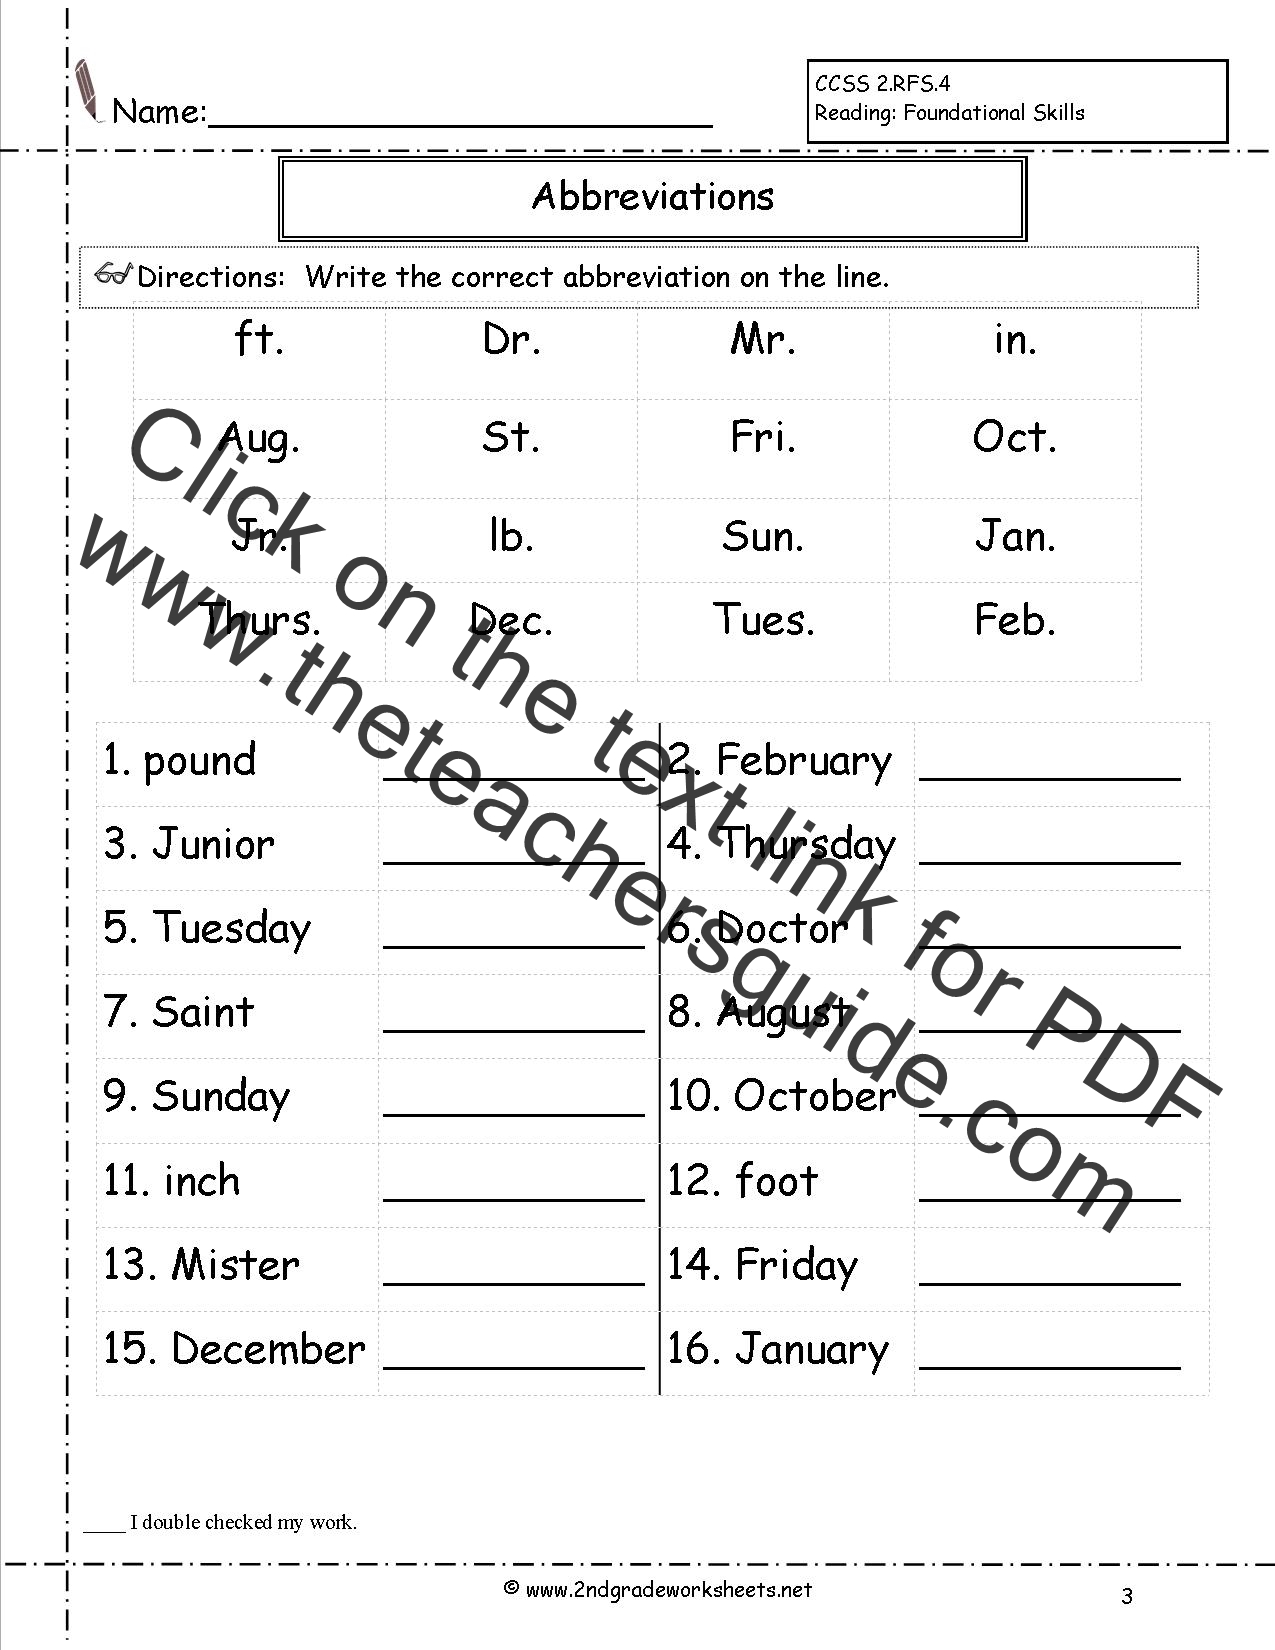 abbreviation worksheets for 6th grade